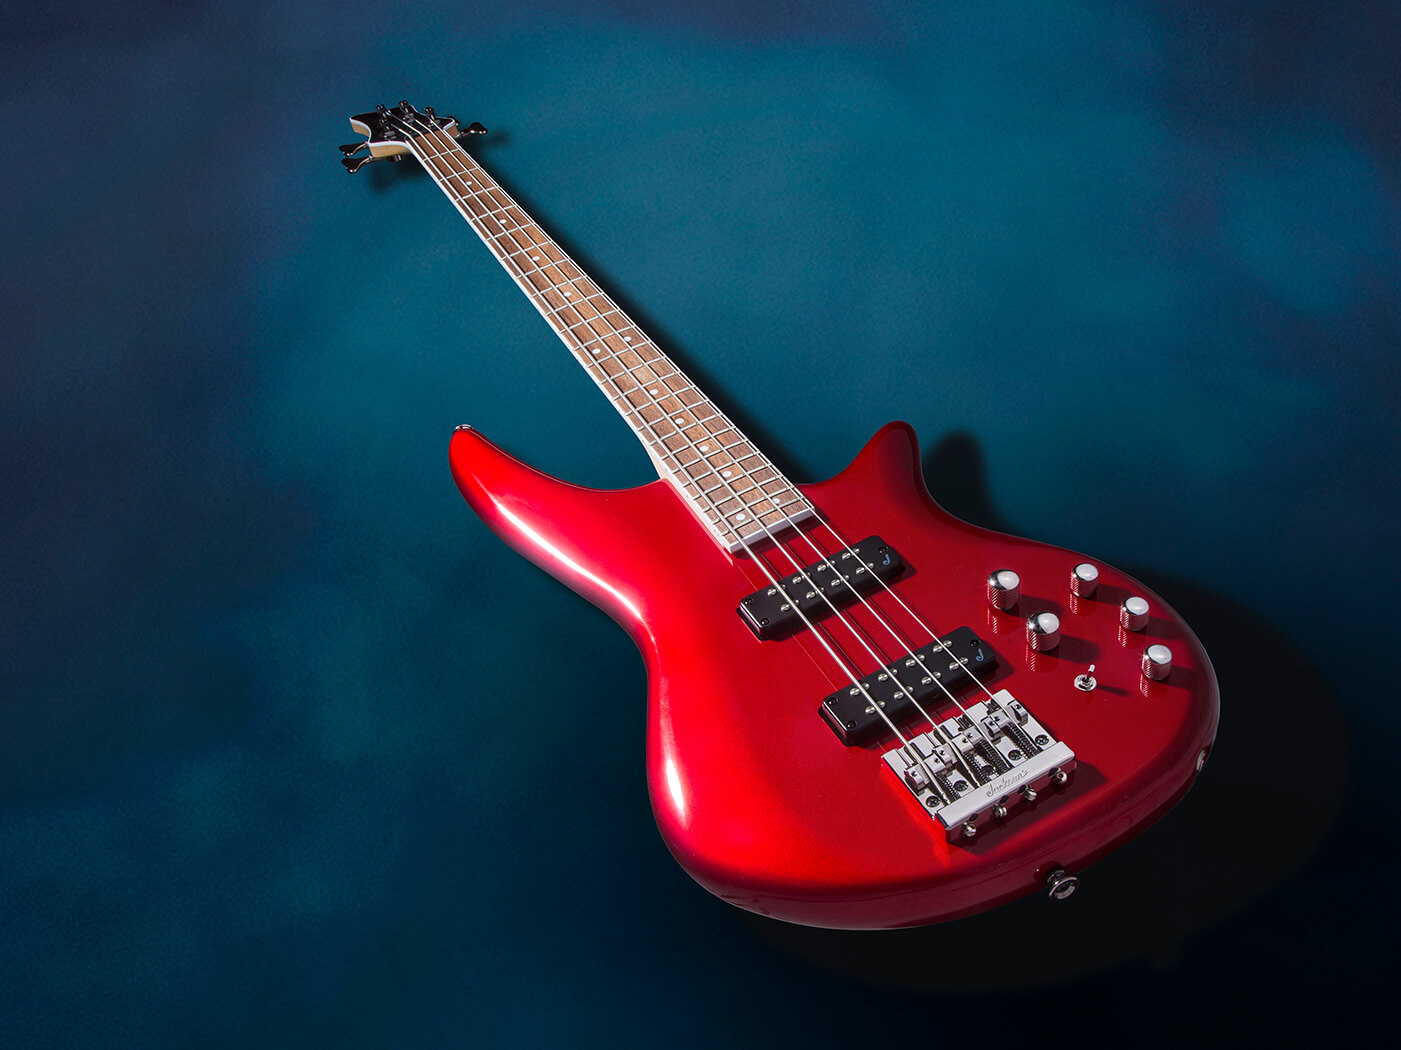 The JS Series Spectra Bass JS3 in Metallic Red